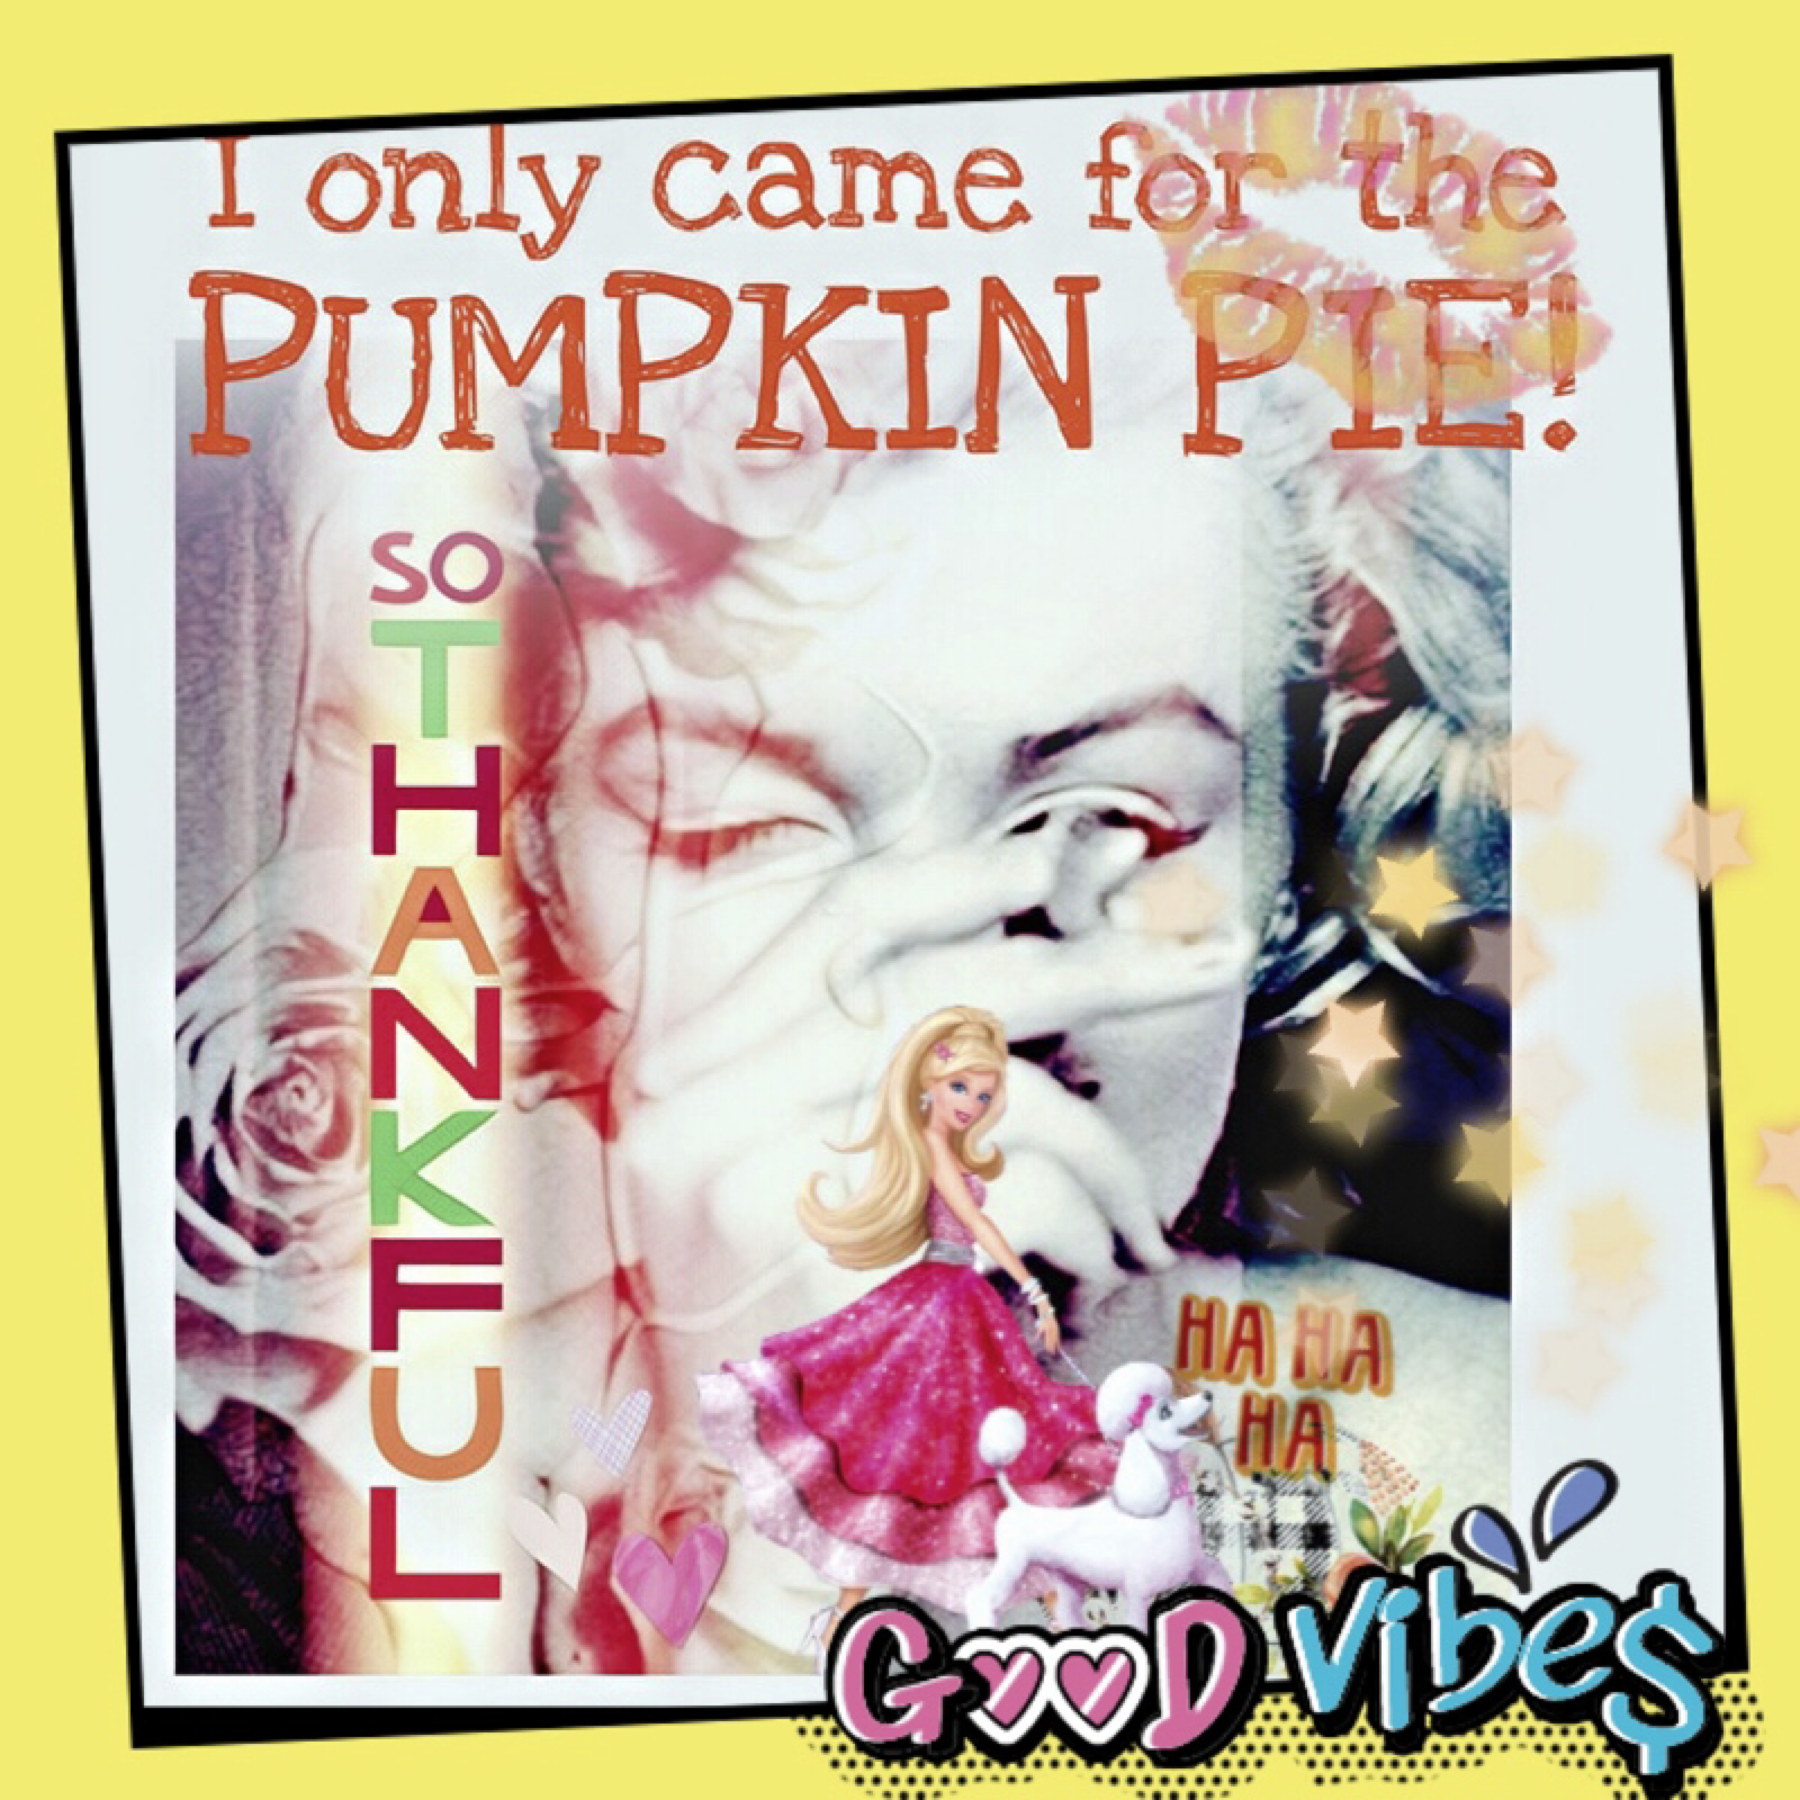 Loving pumpkin pie 💋